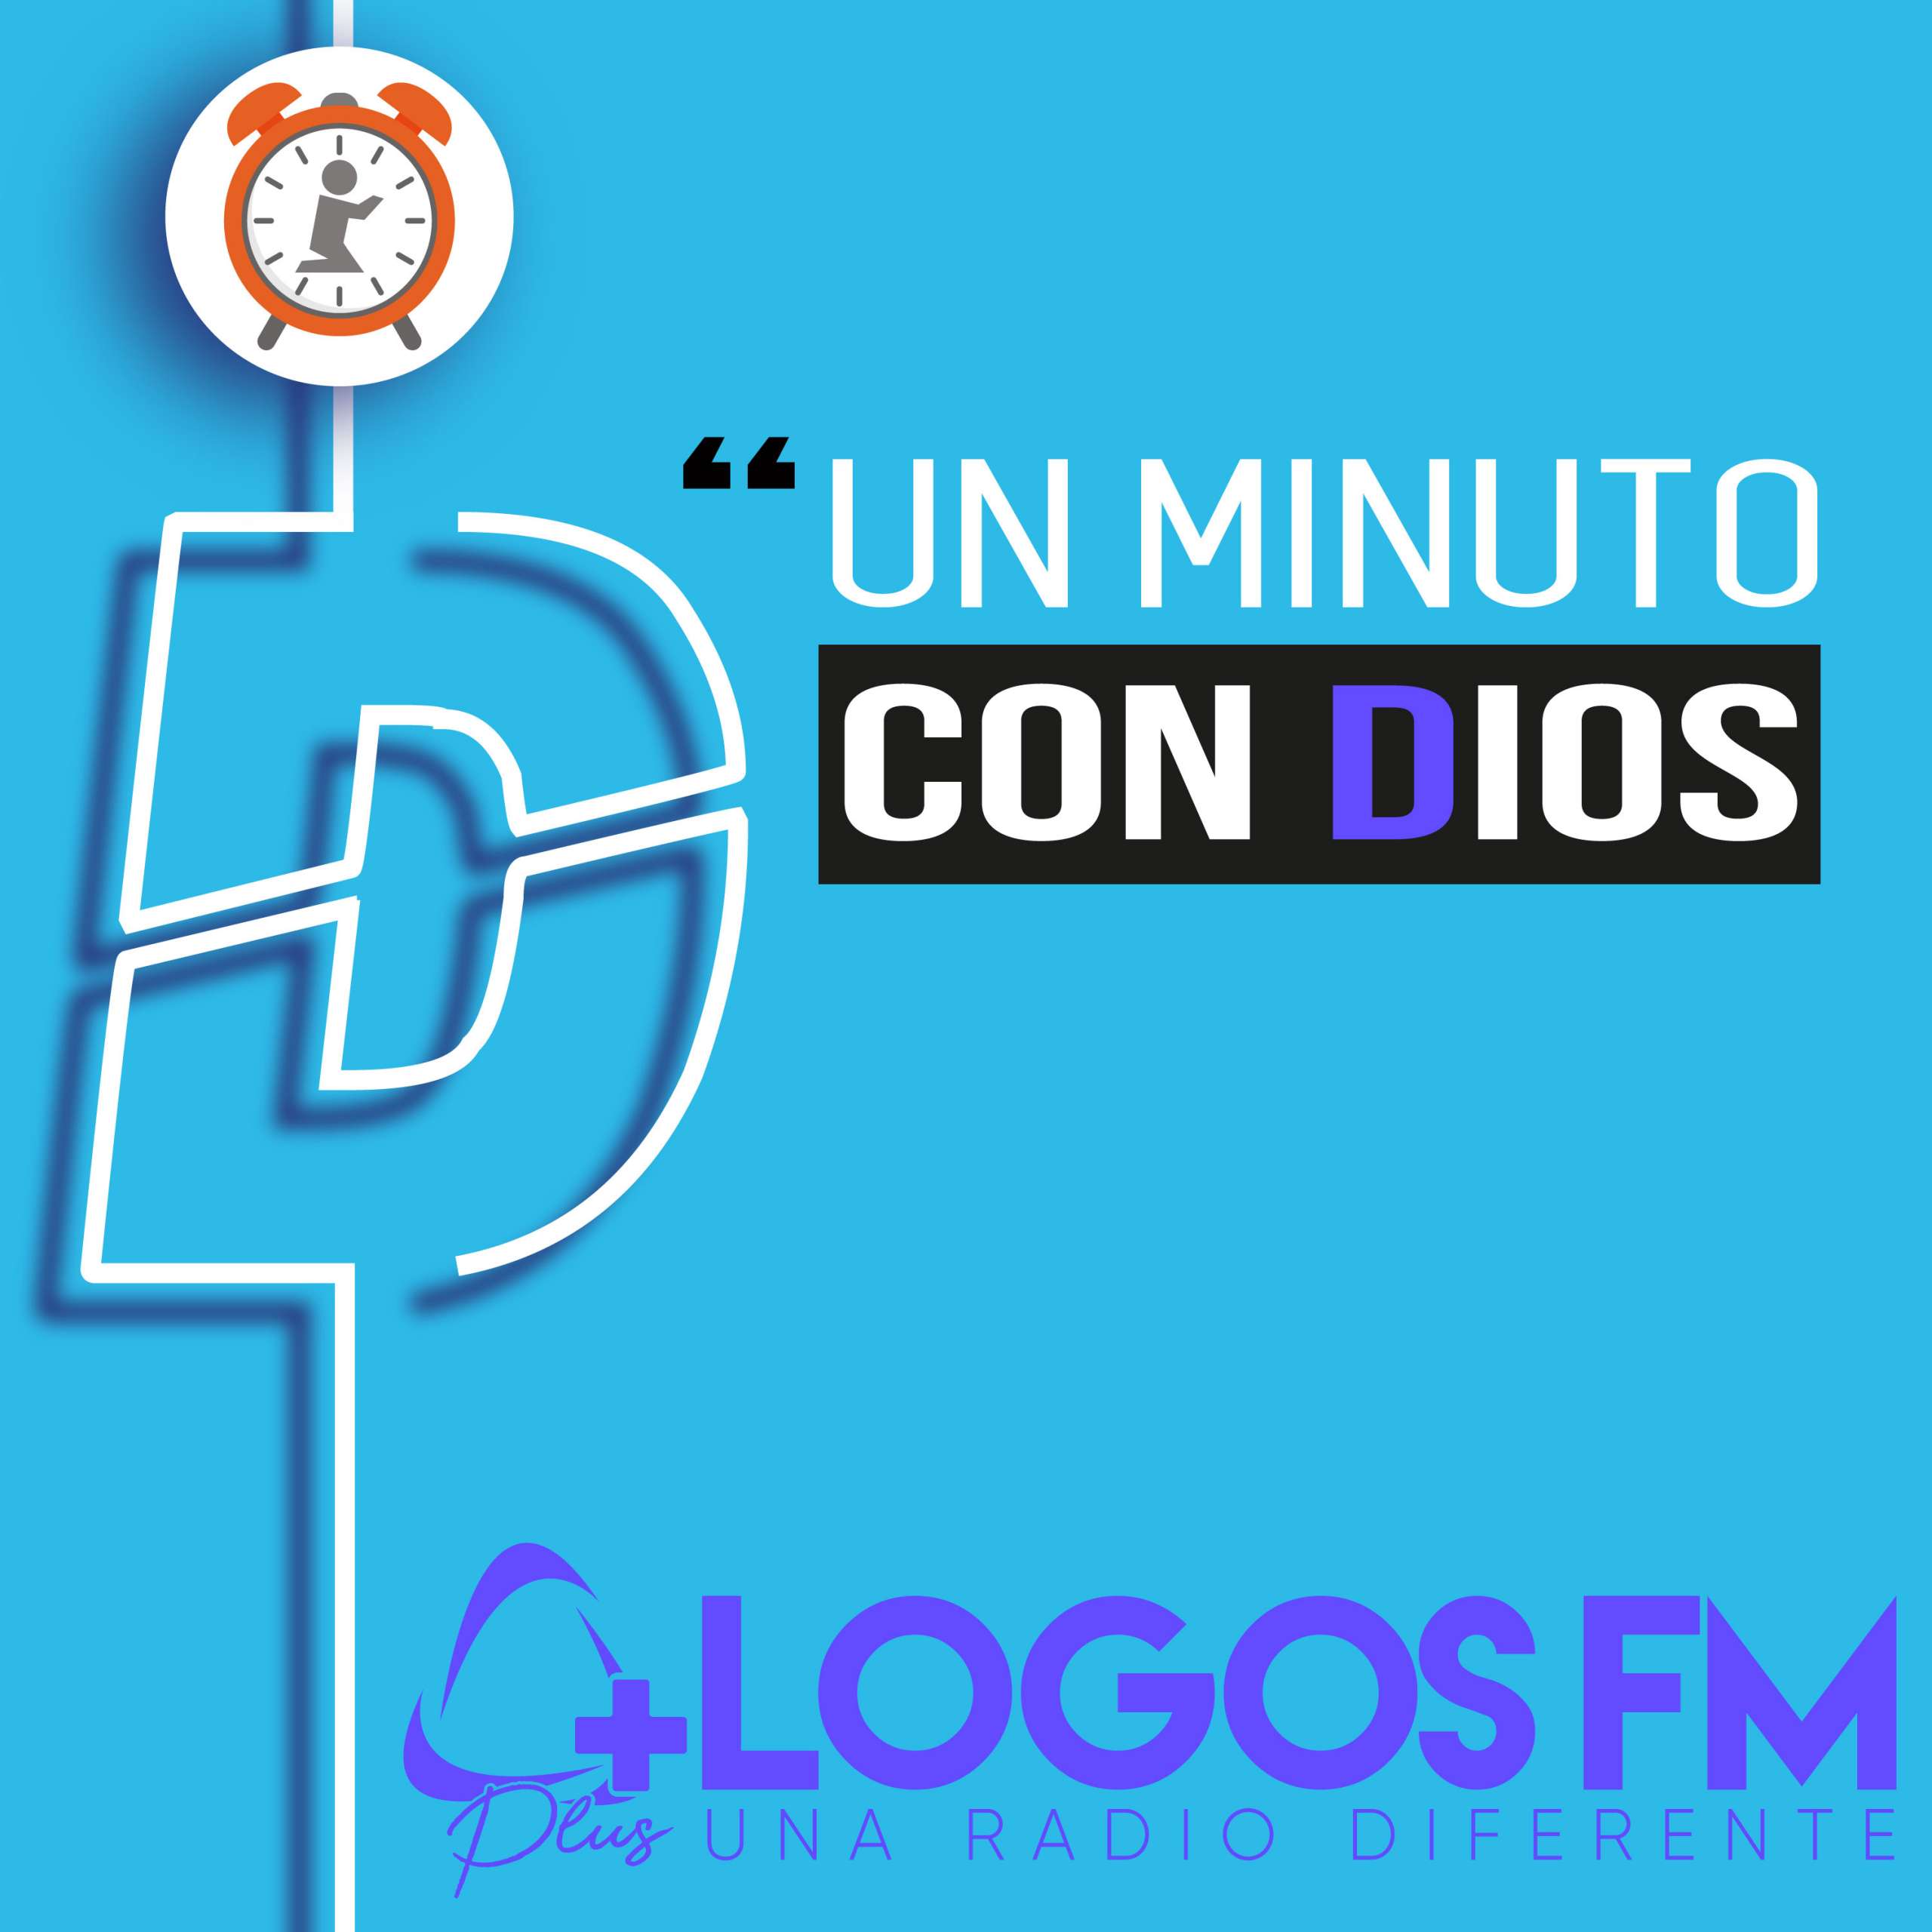 Un minuto con Dios - Episodio 441 - Loida Vargas